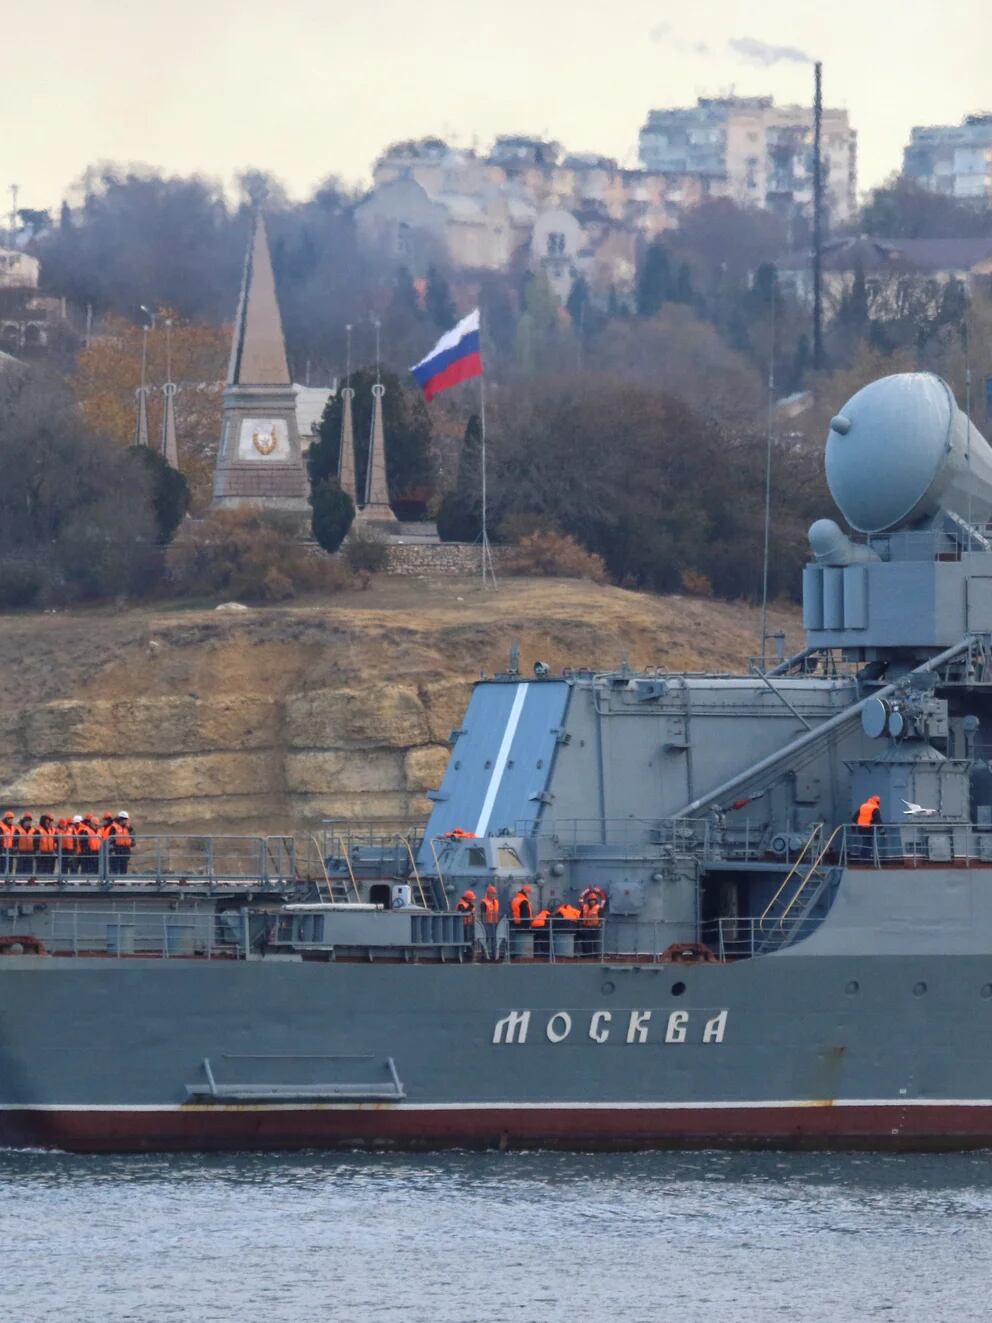 Rusia moviliza a su flota para salvar a los 7 tripulantes de un